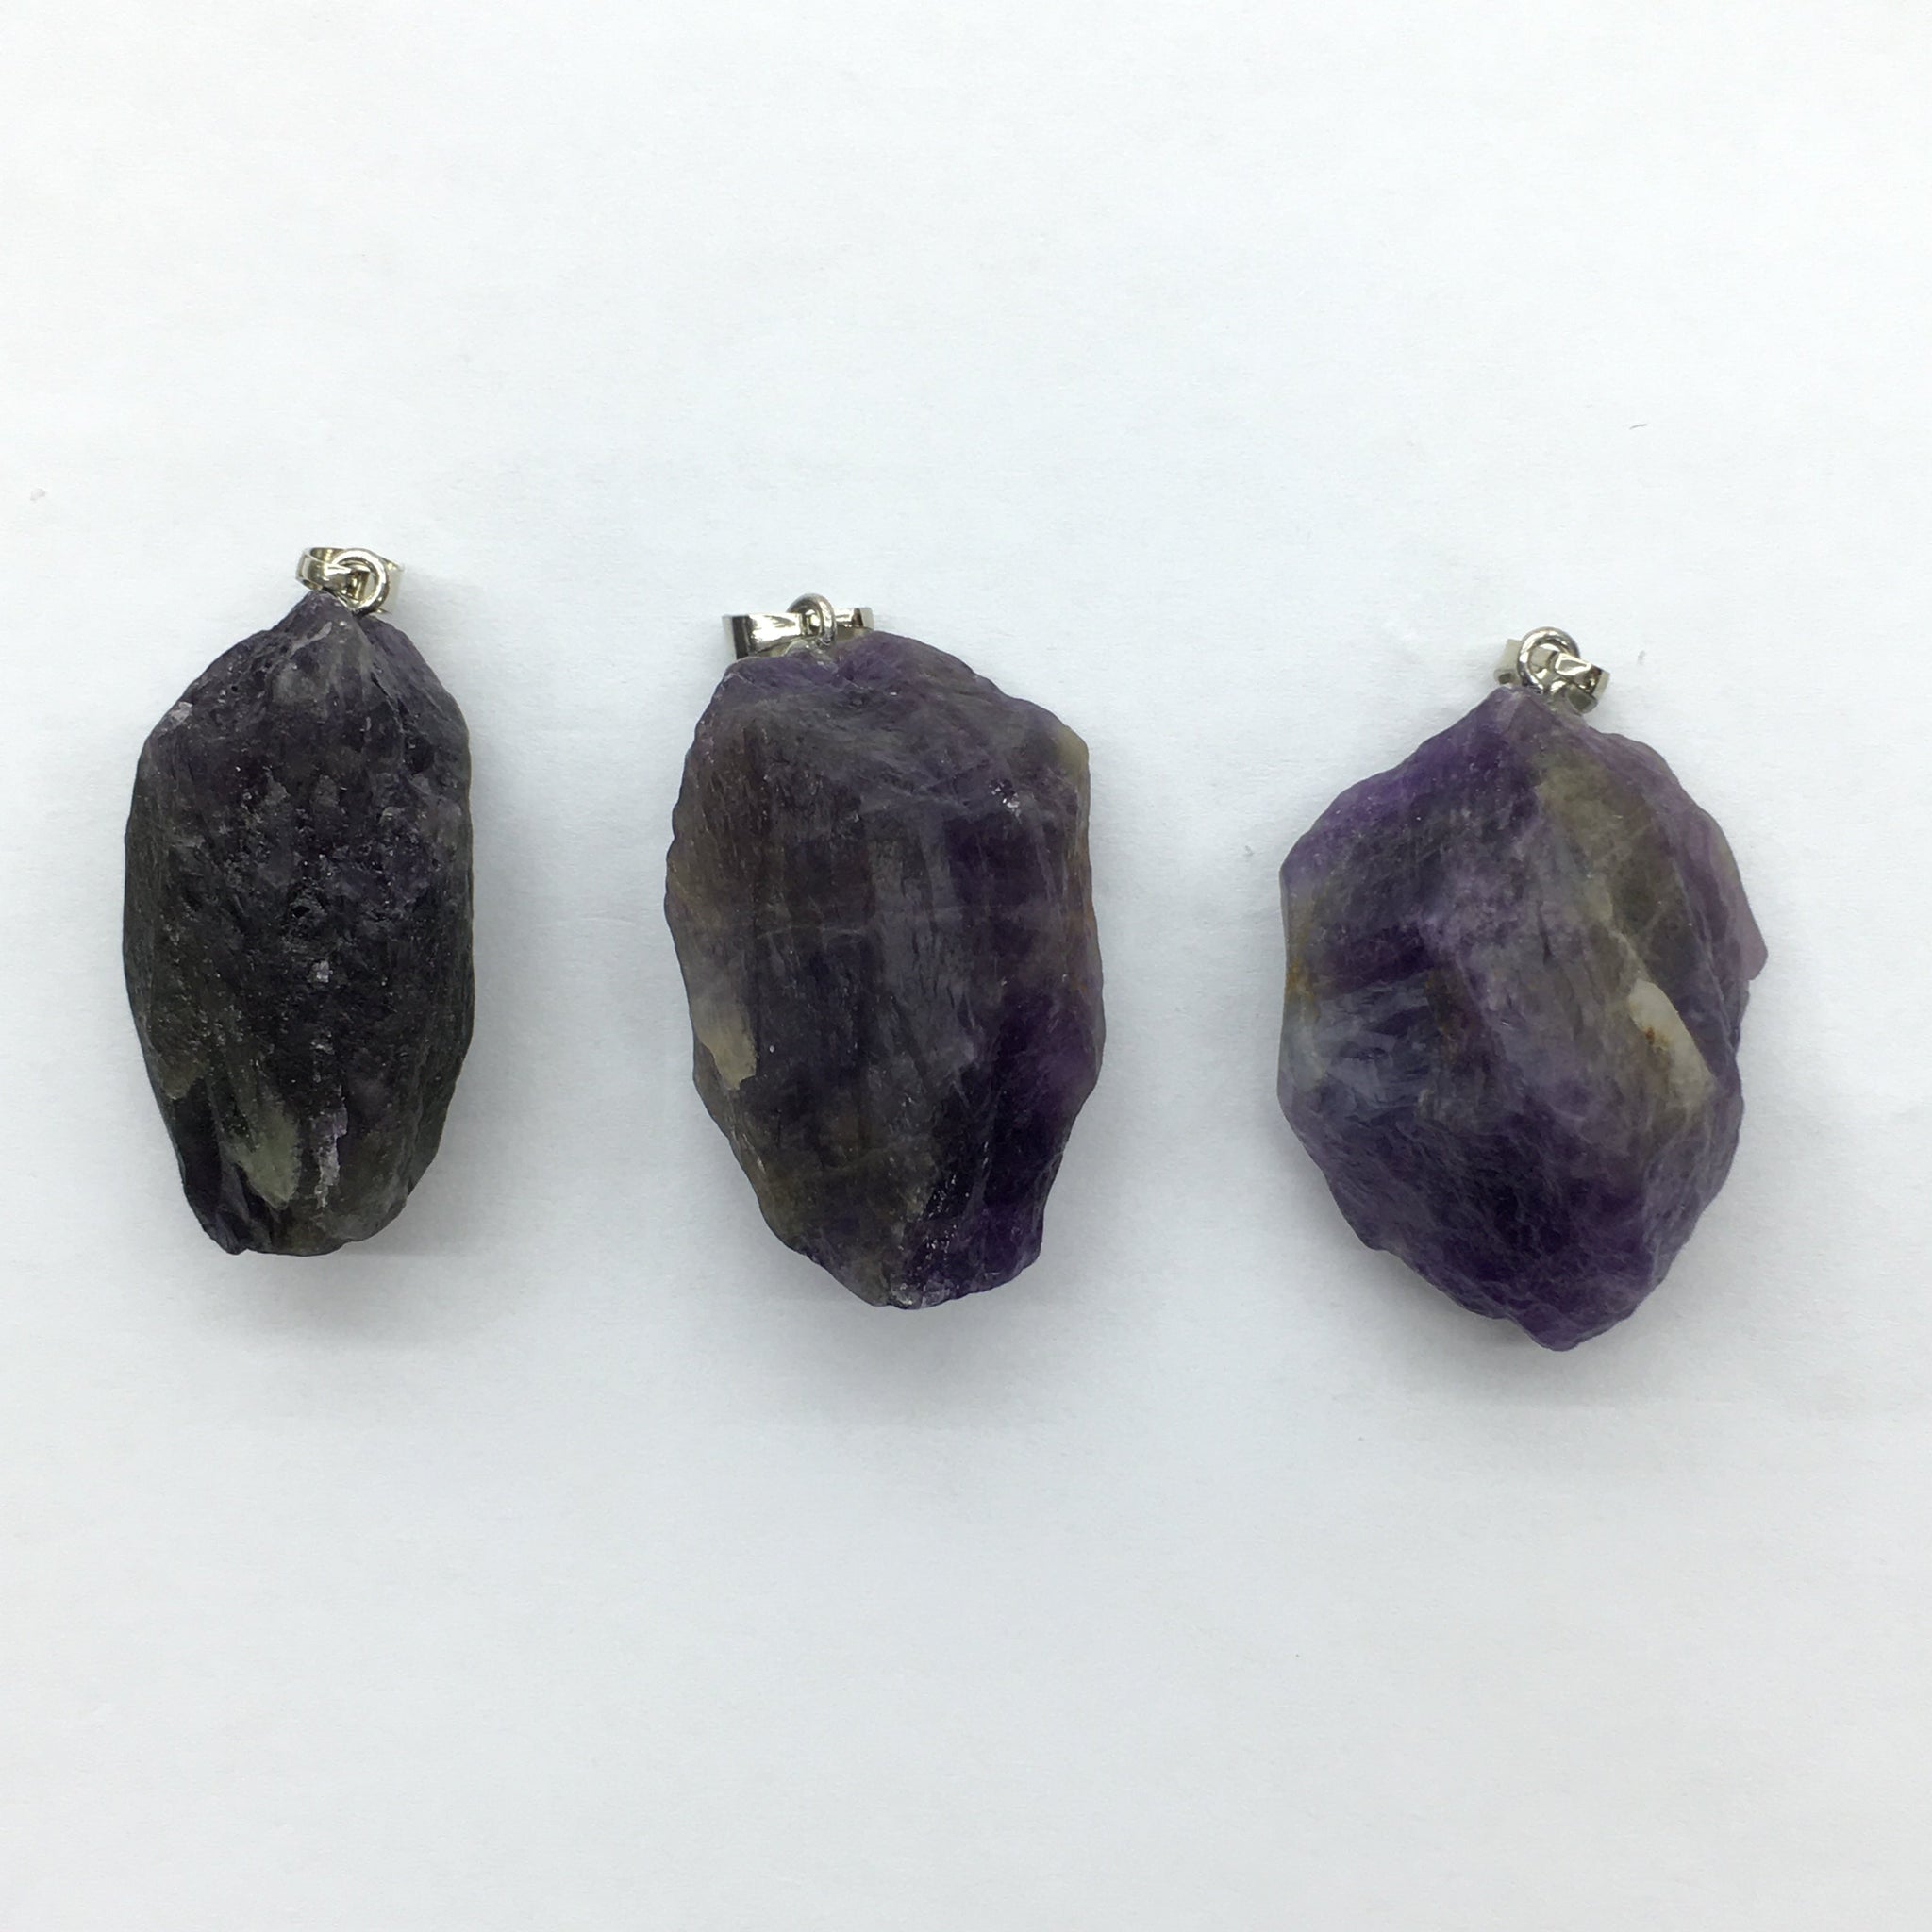 1pcs Natural Purple Cloud Mother Stone Obsidian Crystal Quartz